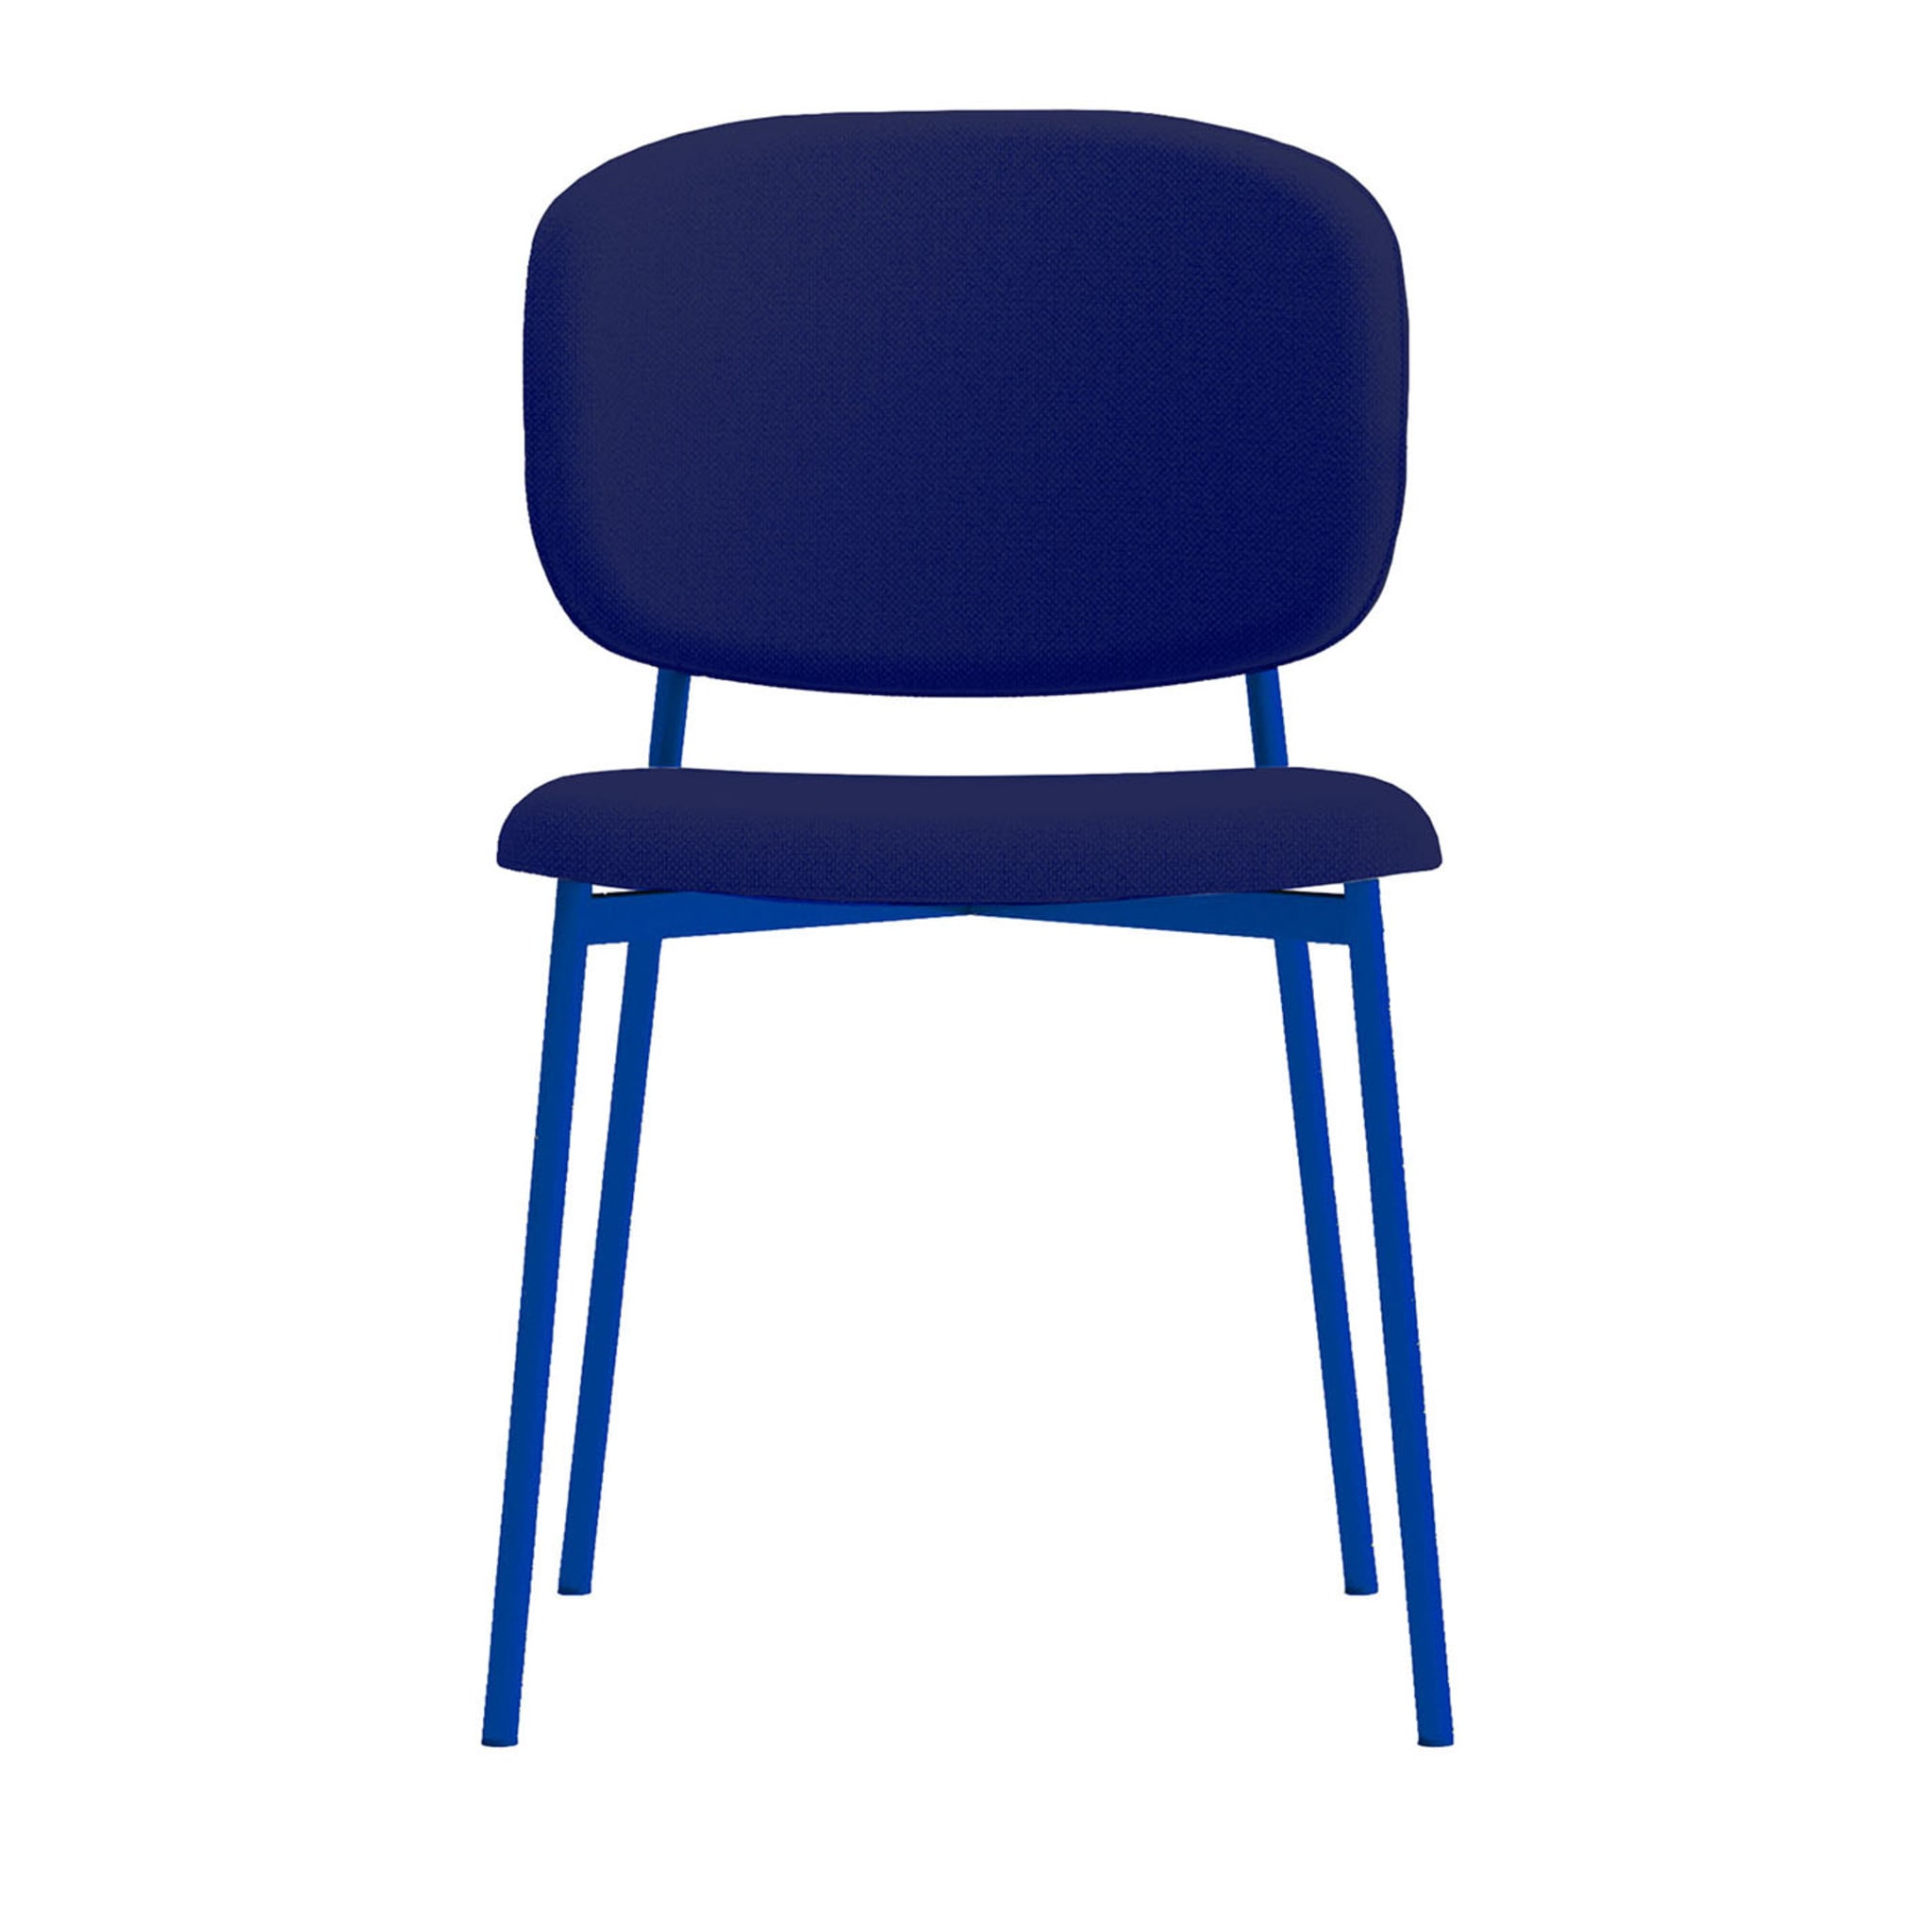 Wround Blue Chair by Copiosa Lab - Main view